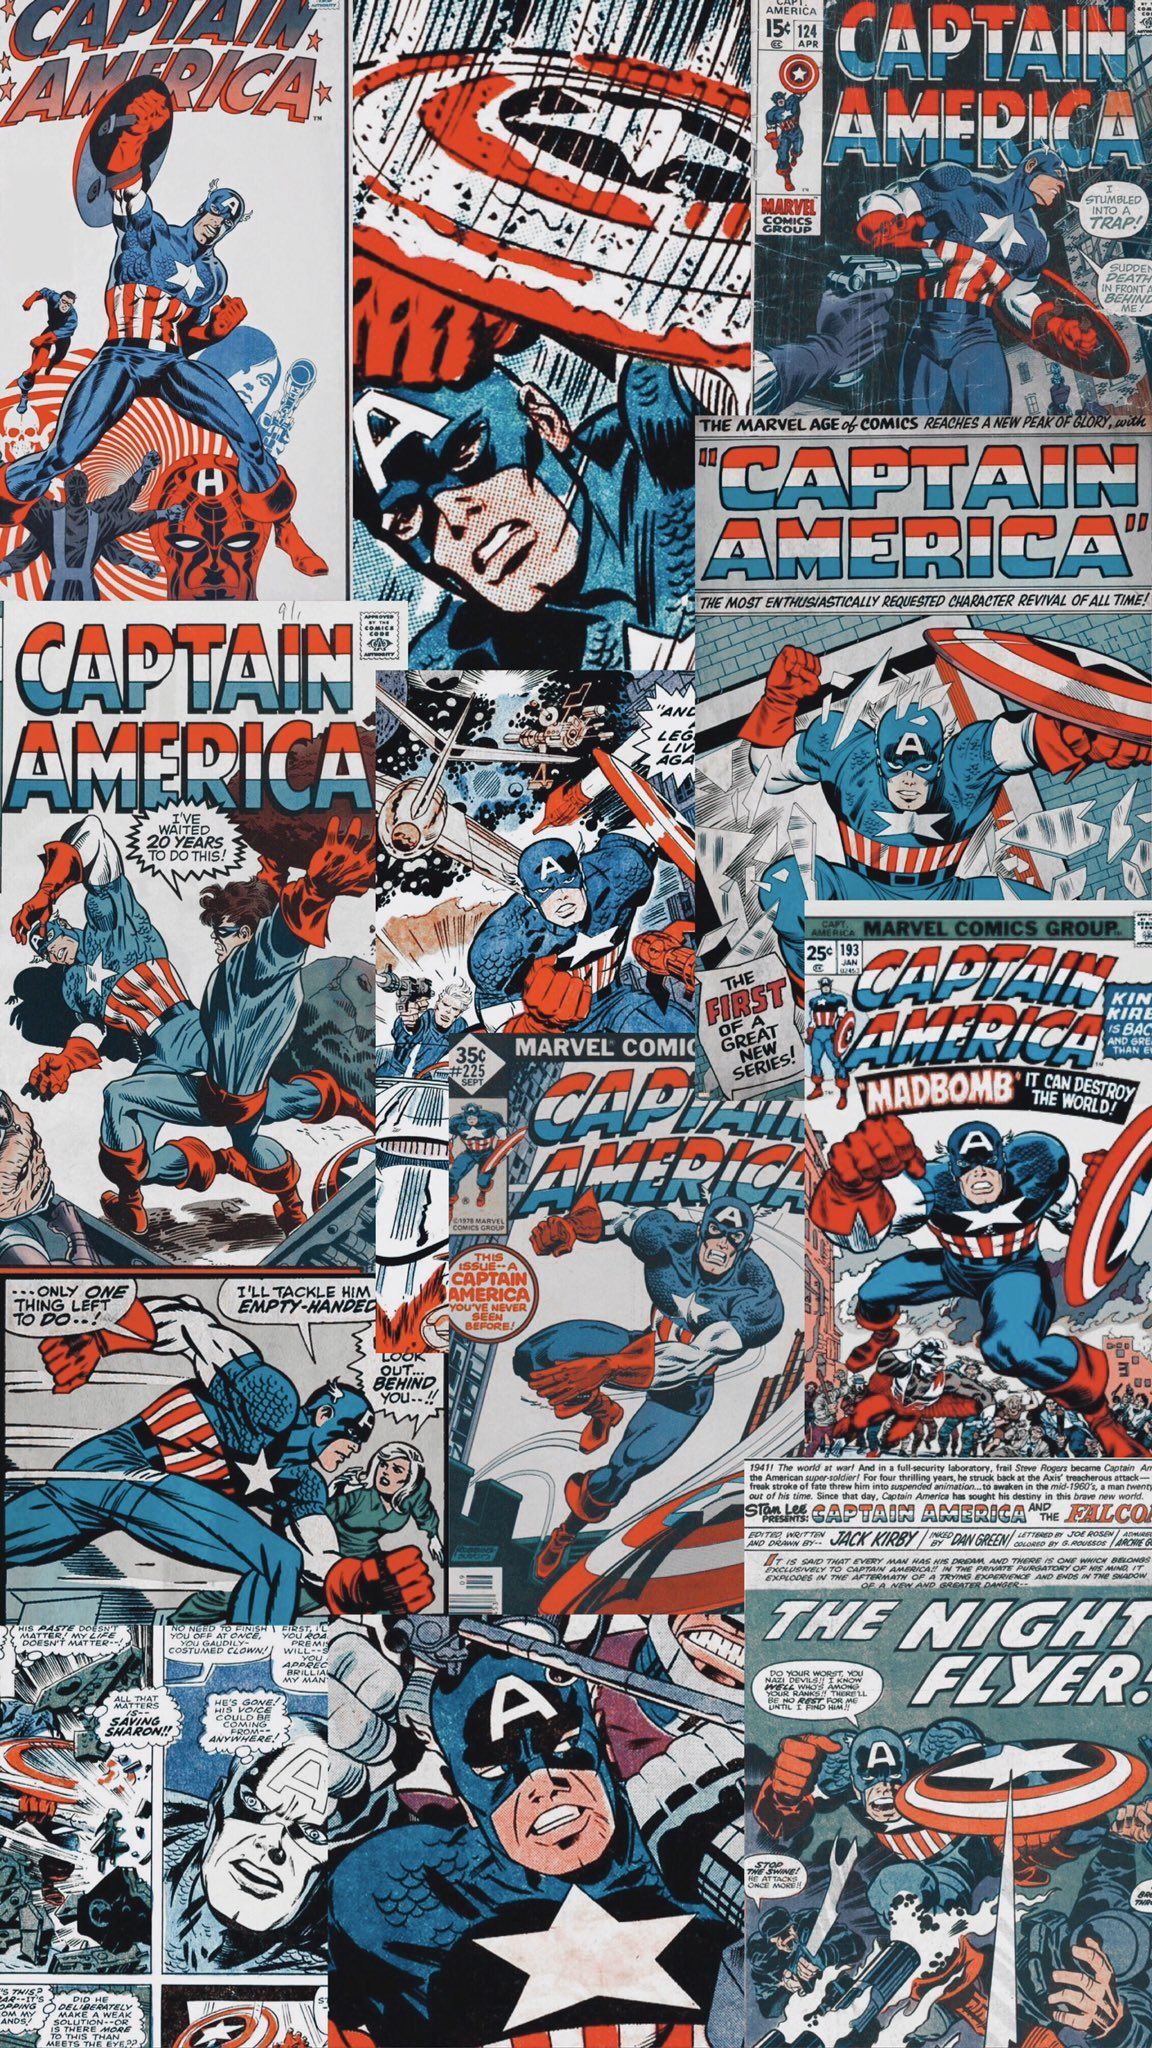 Avengers Endgame Comic Art Image Wallpapers